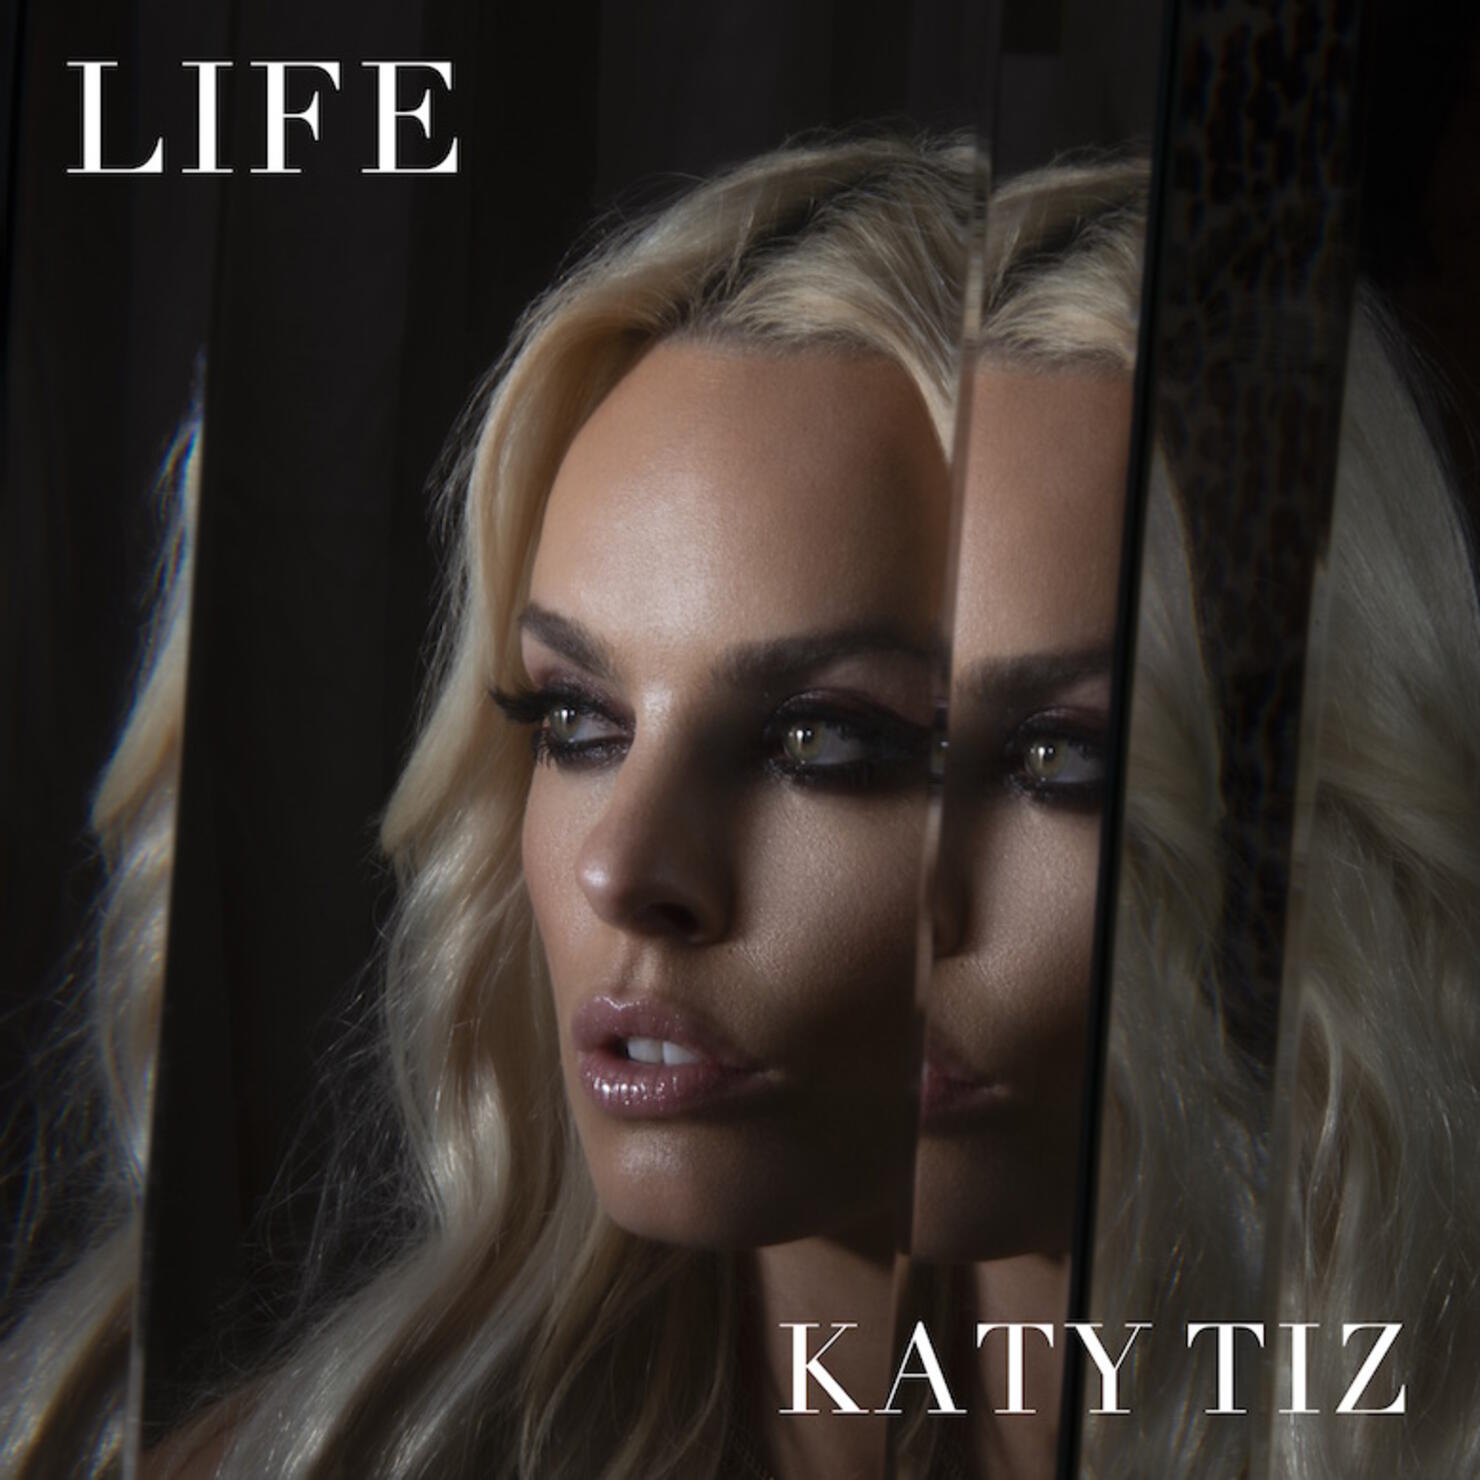 Katy Tiz - "Life" Cover Art